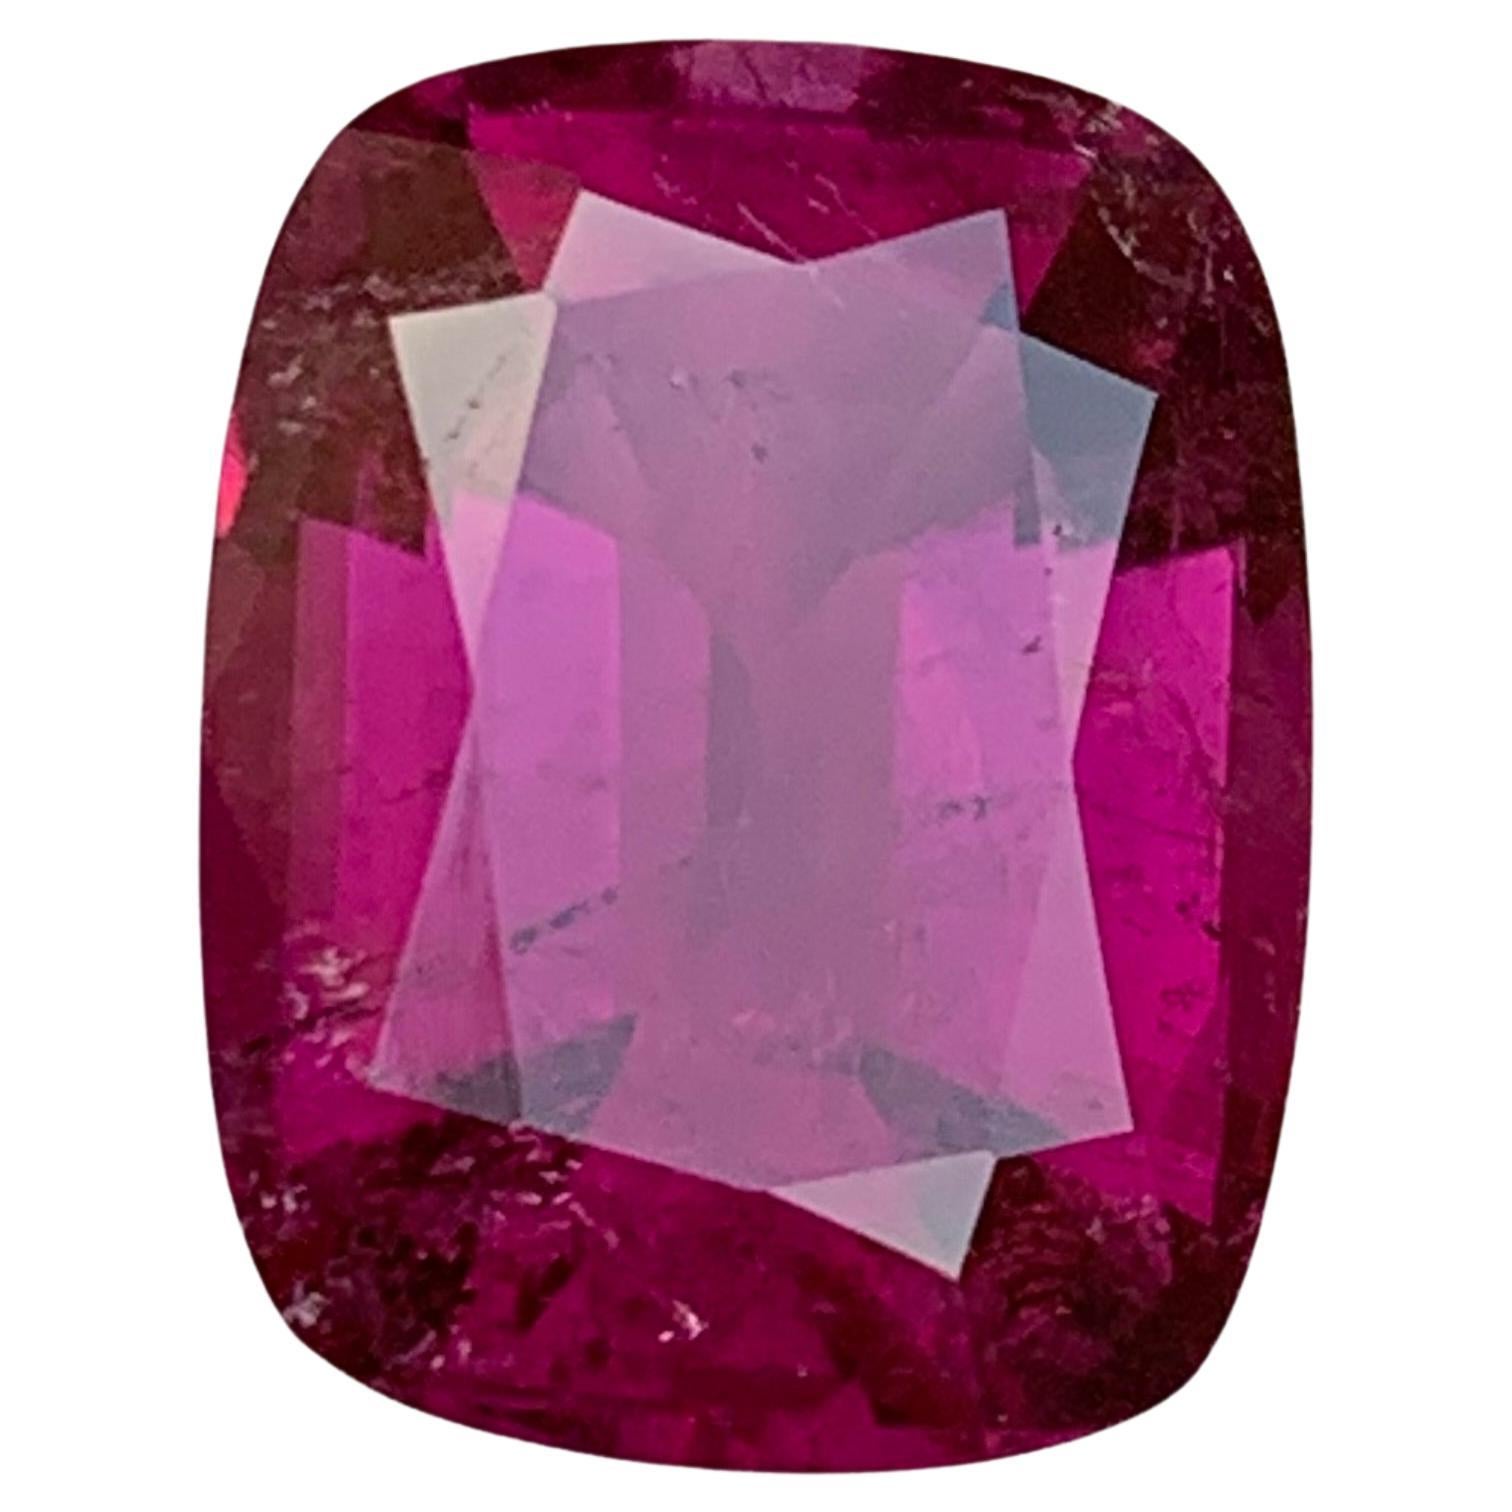 Rare Purplish Pink Natural Rubellite Tourmaline Gemstone, 13.45 Ct Cushion Cut